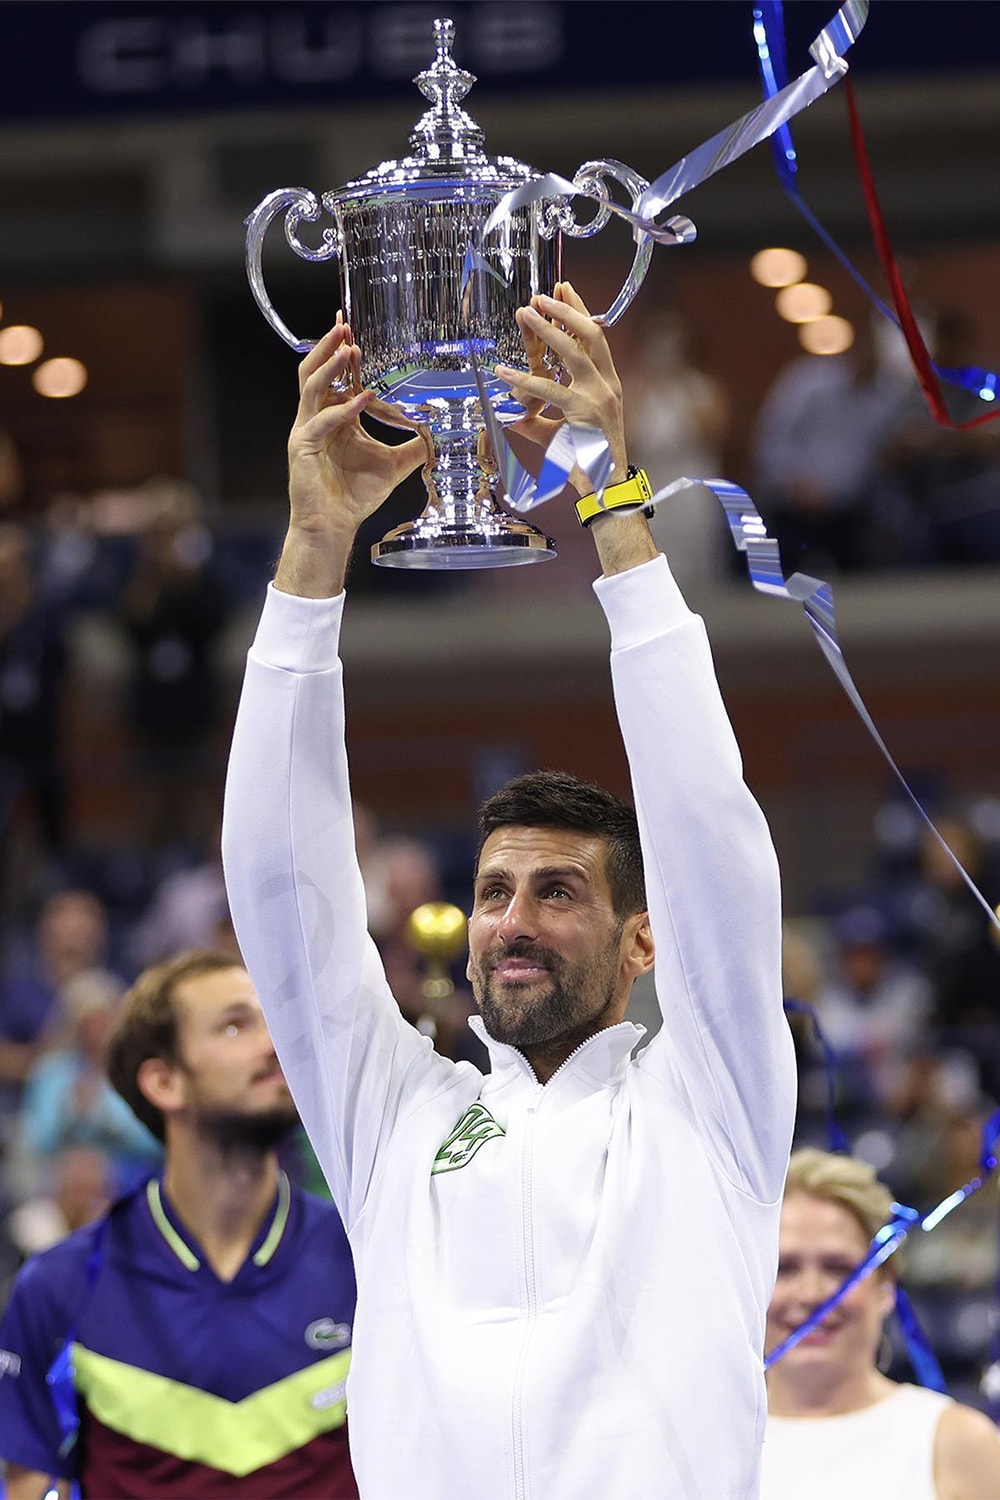 Novak Djokovic 3 盤擊敗 Sergeyevich Medvedev 奪得美國網球公開賽冠軍